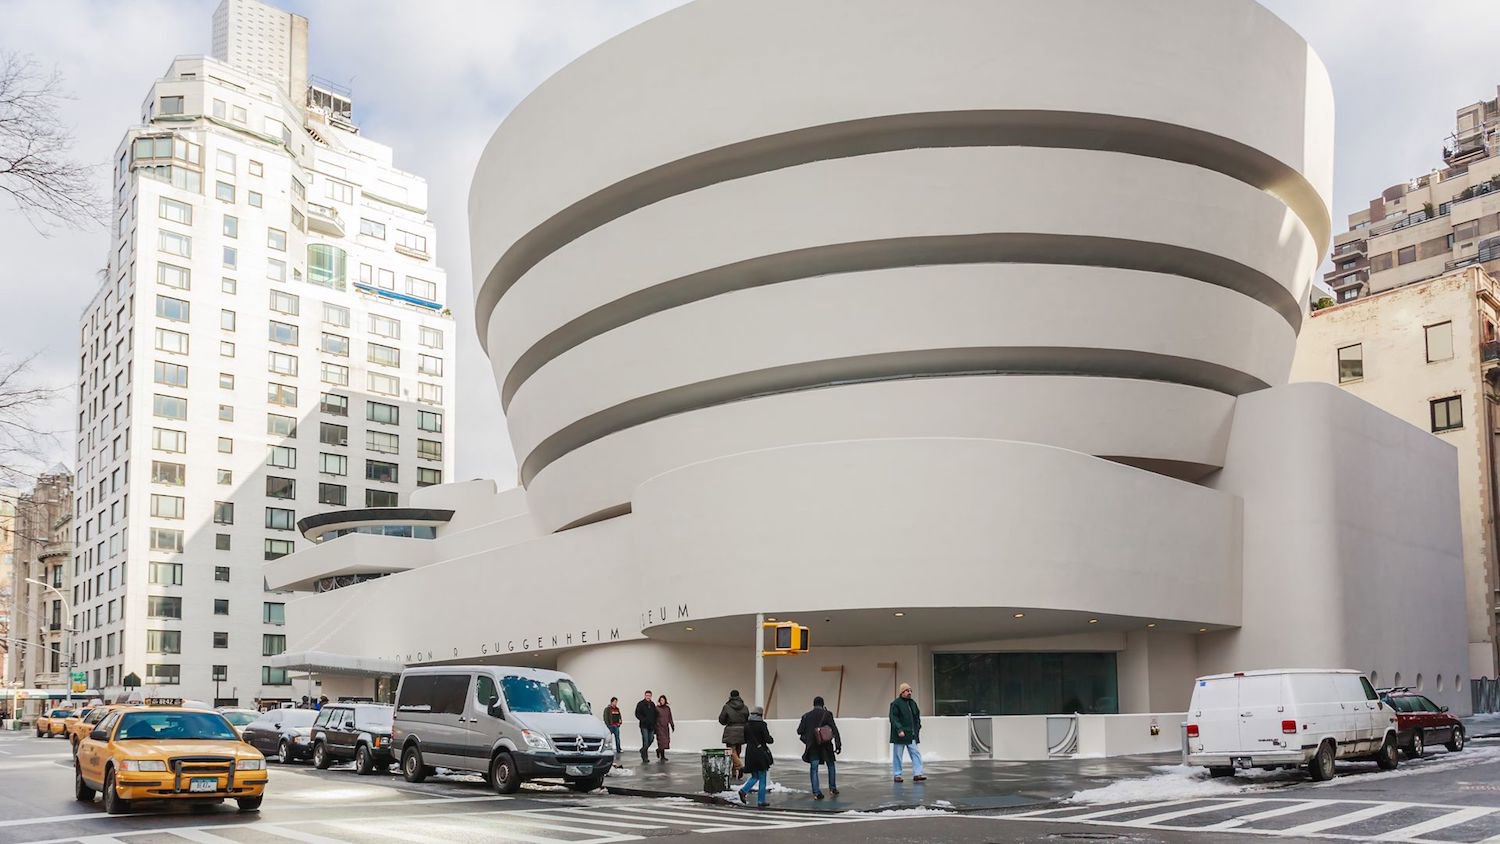 Museo Guggenheim Nueva York Frank Lloyd Wright